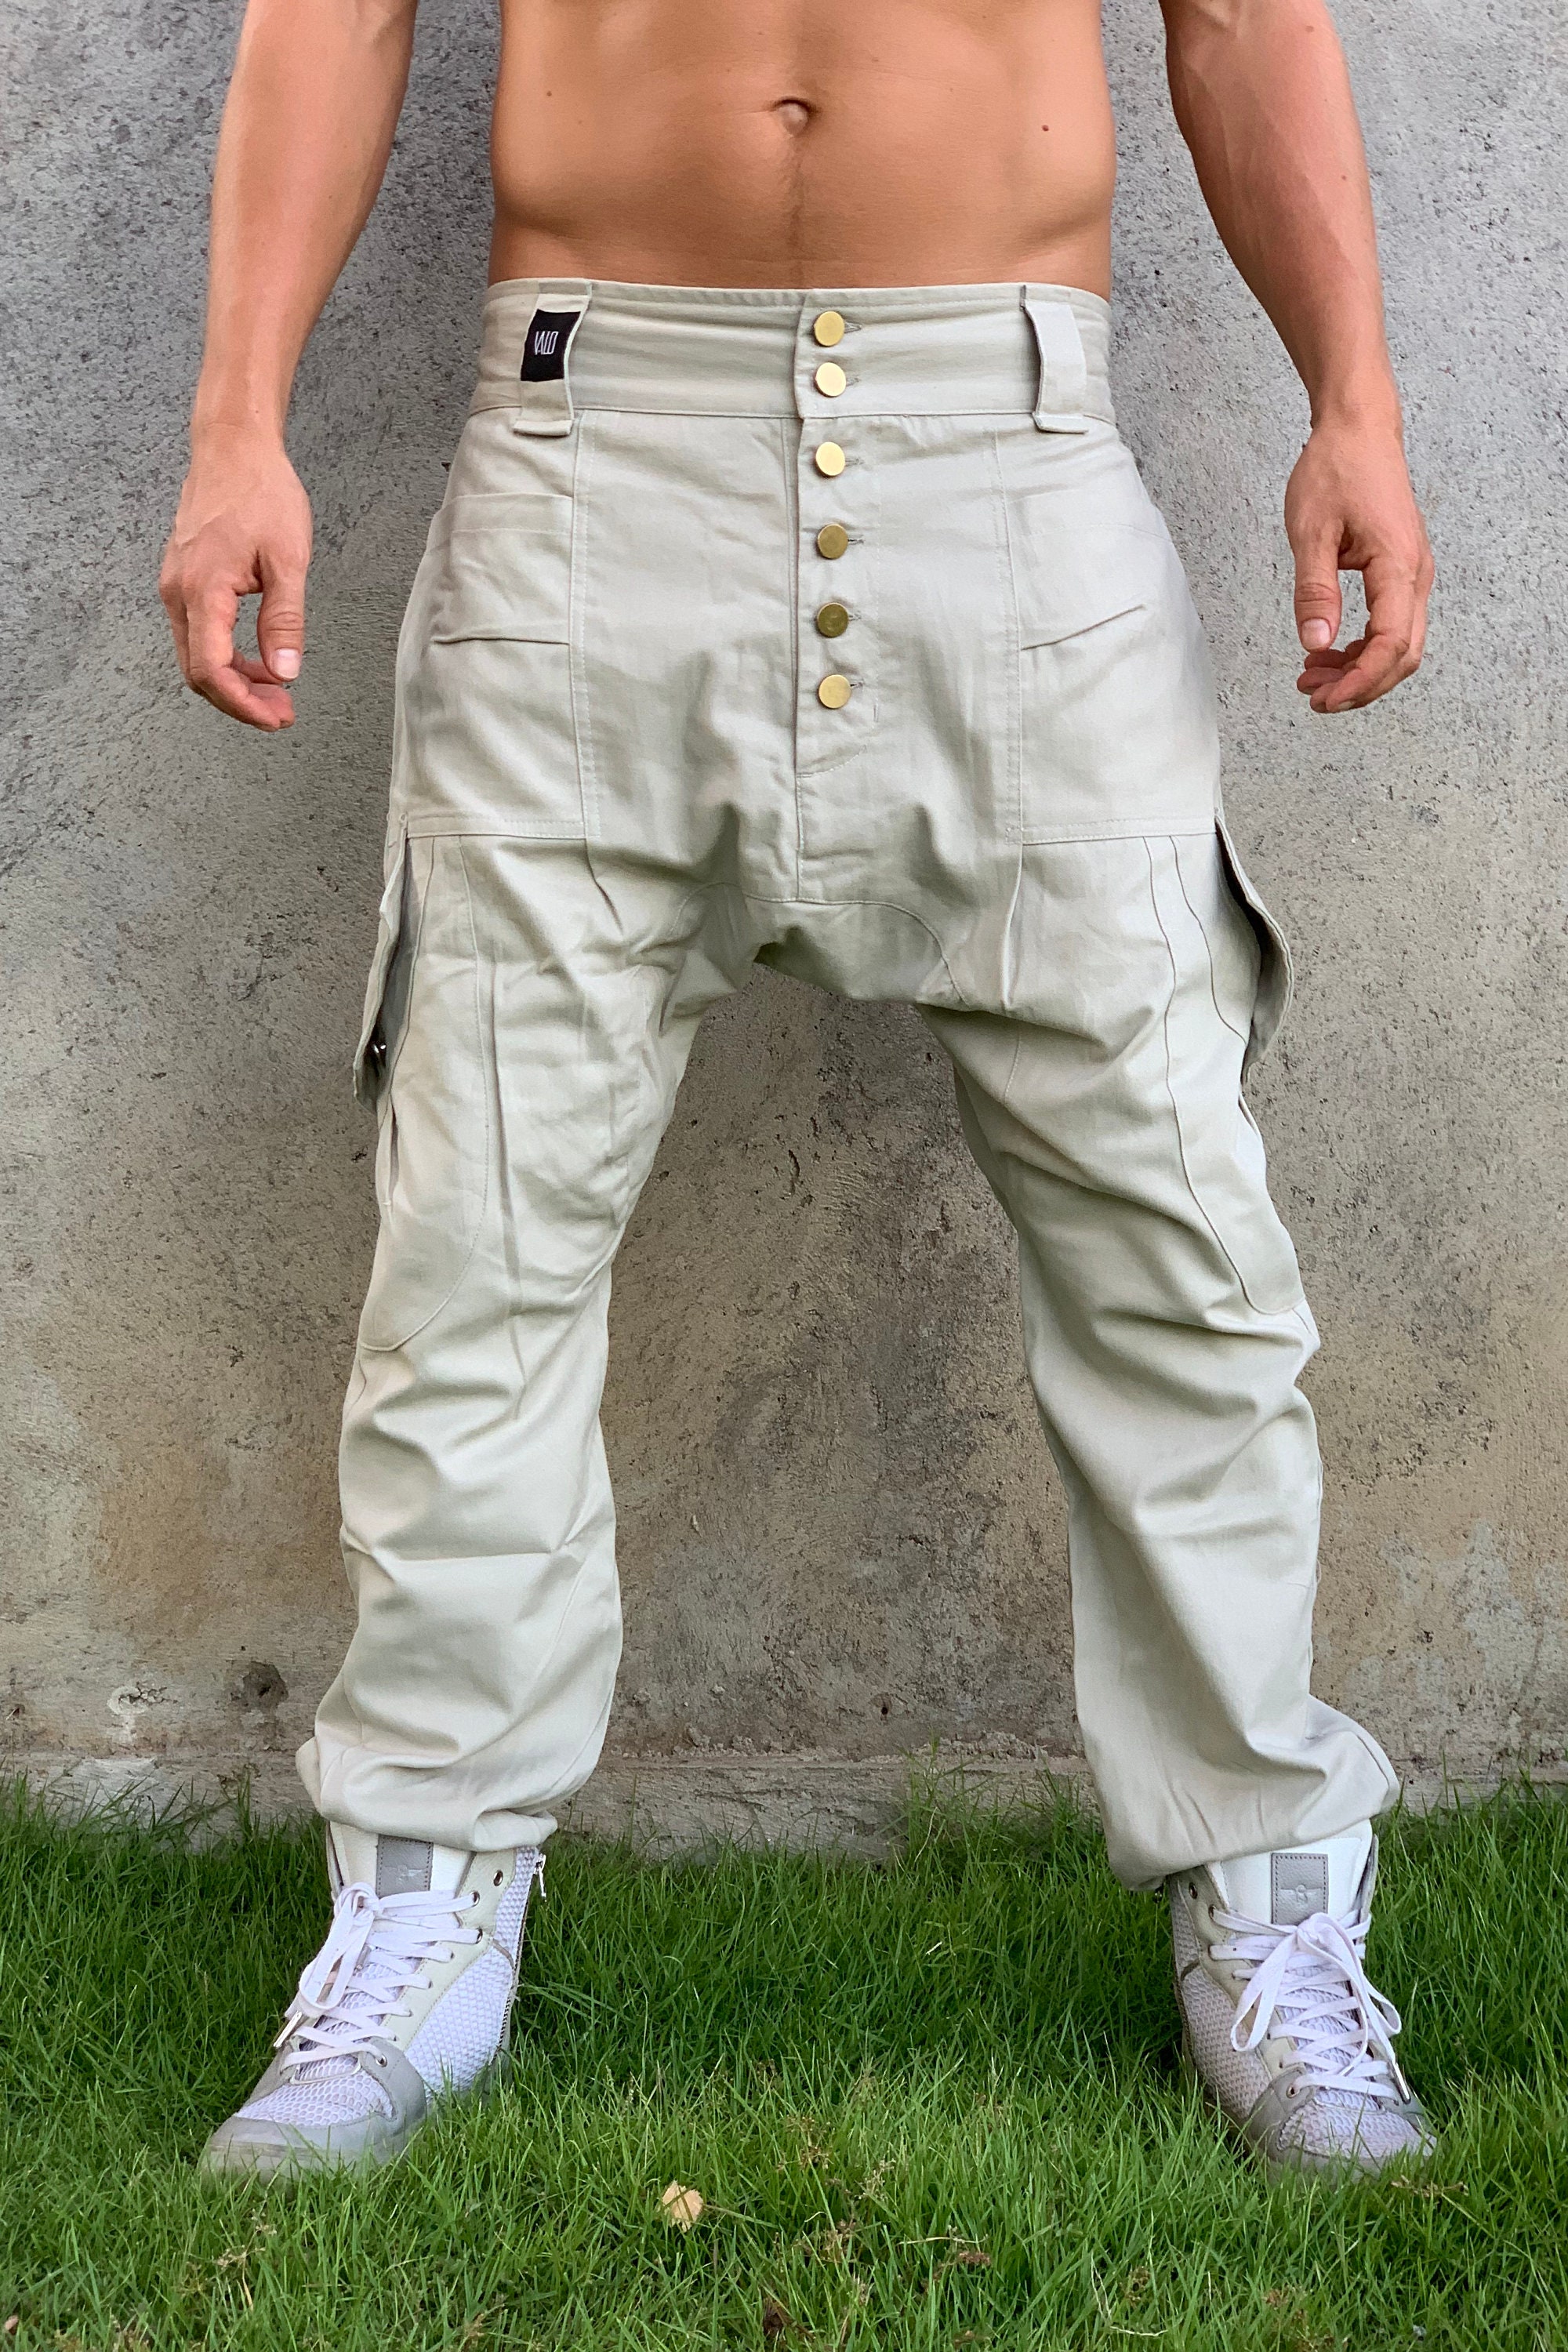 Urban drop crotch cargo pants / multi pocket pants / Harem | Etsy